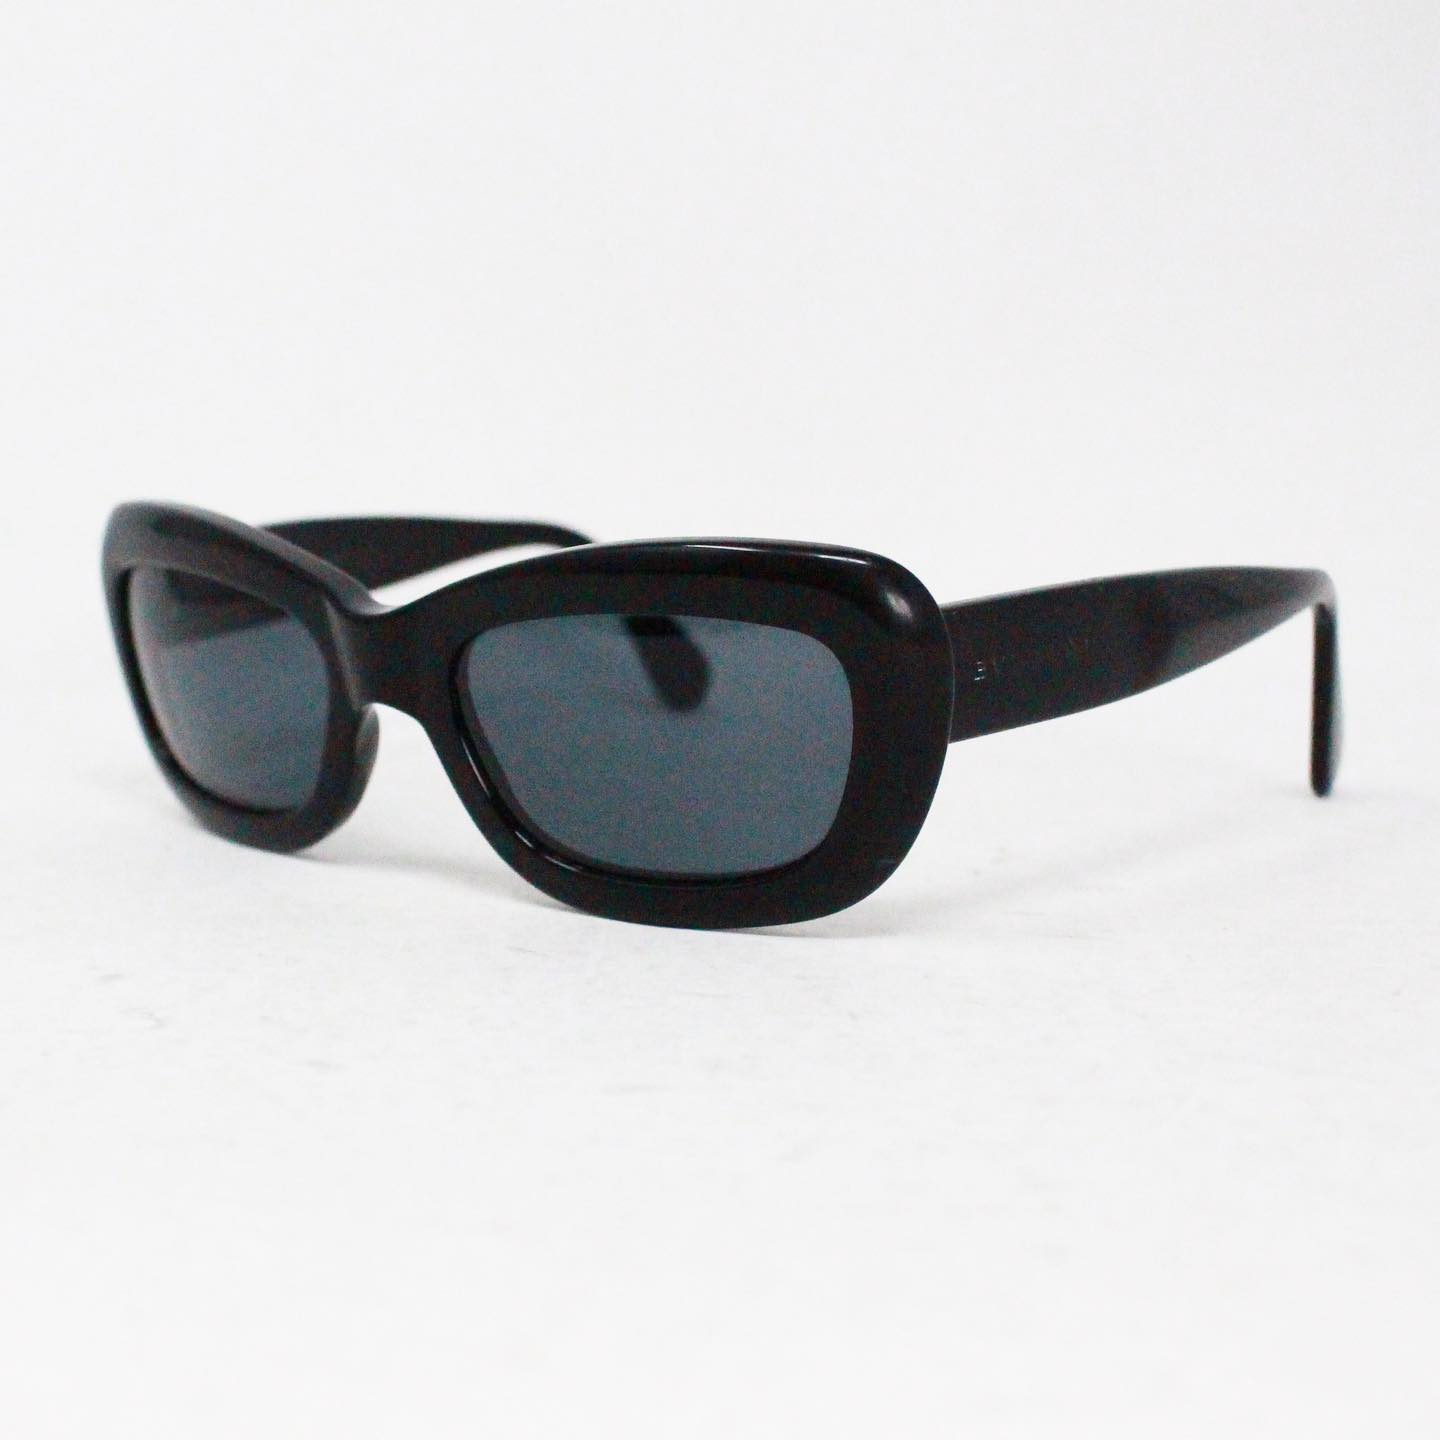 AUTHENTIC Pre Owned BVLGARI 41371 Black Frame Sunglasses 1